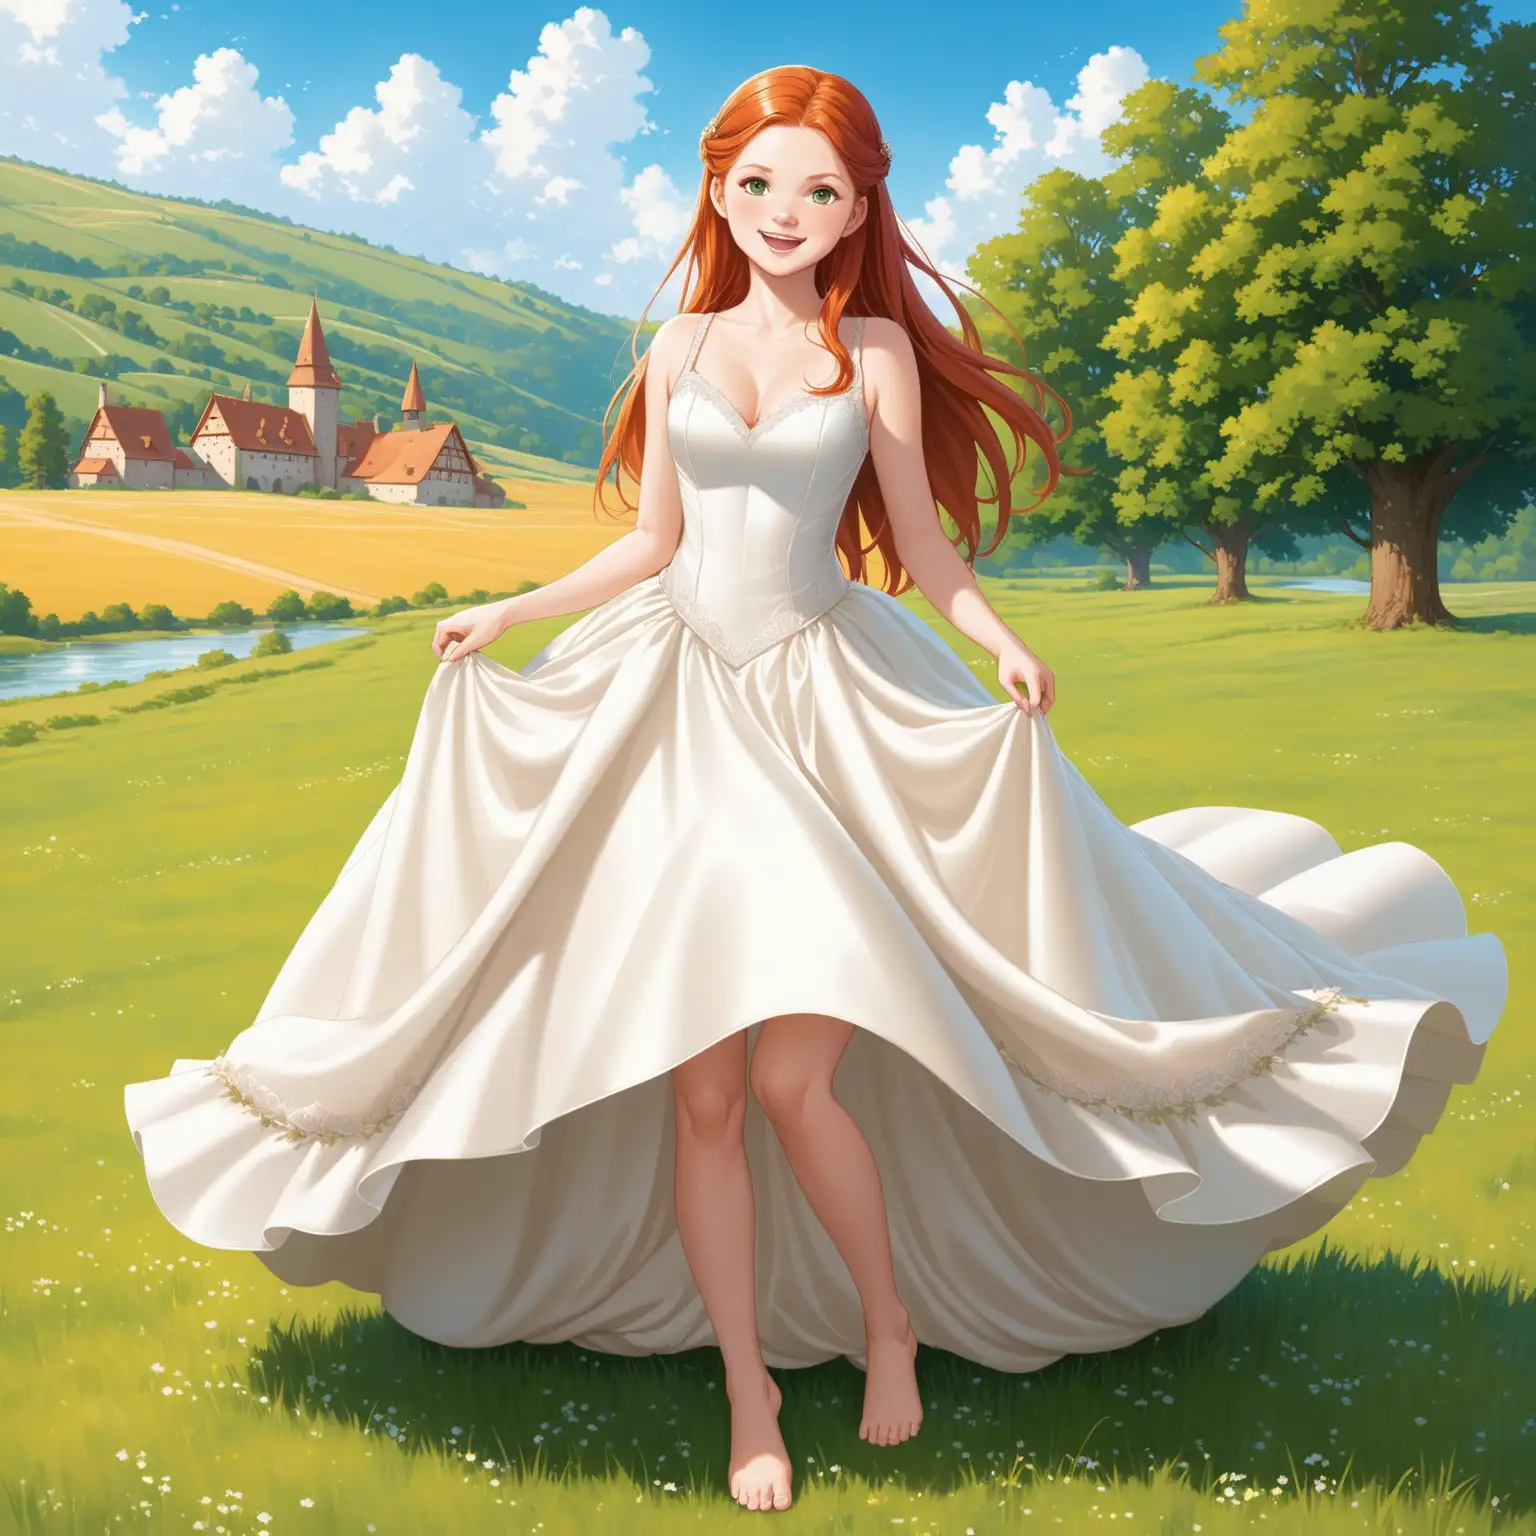 Ginny Weasley in Sensual Wedding Dress Poses Outdoors